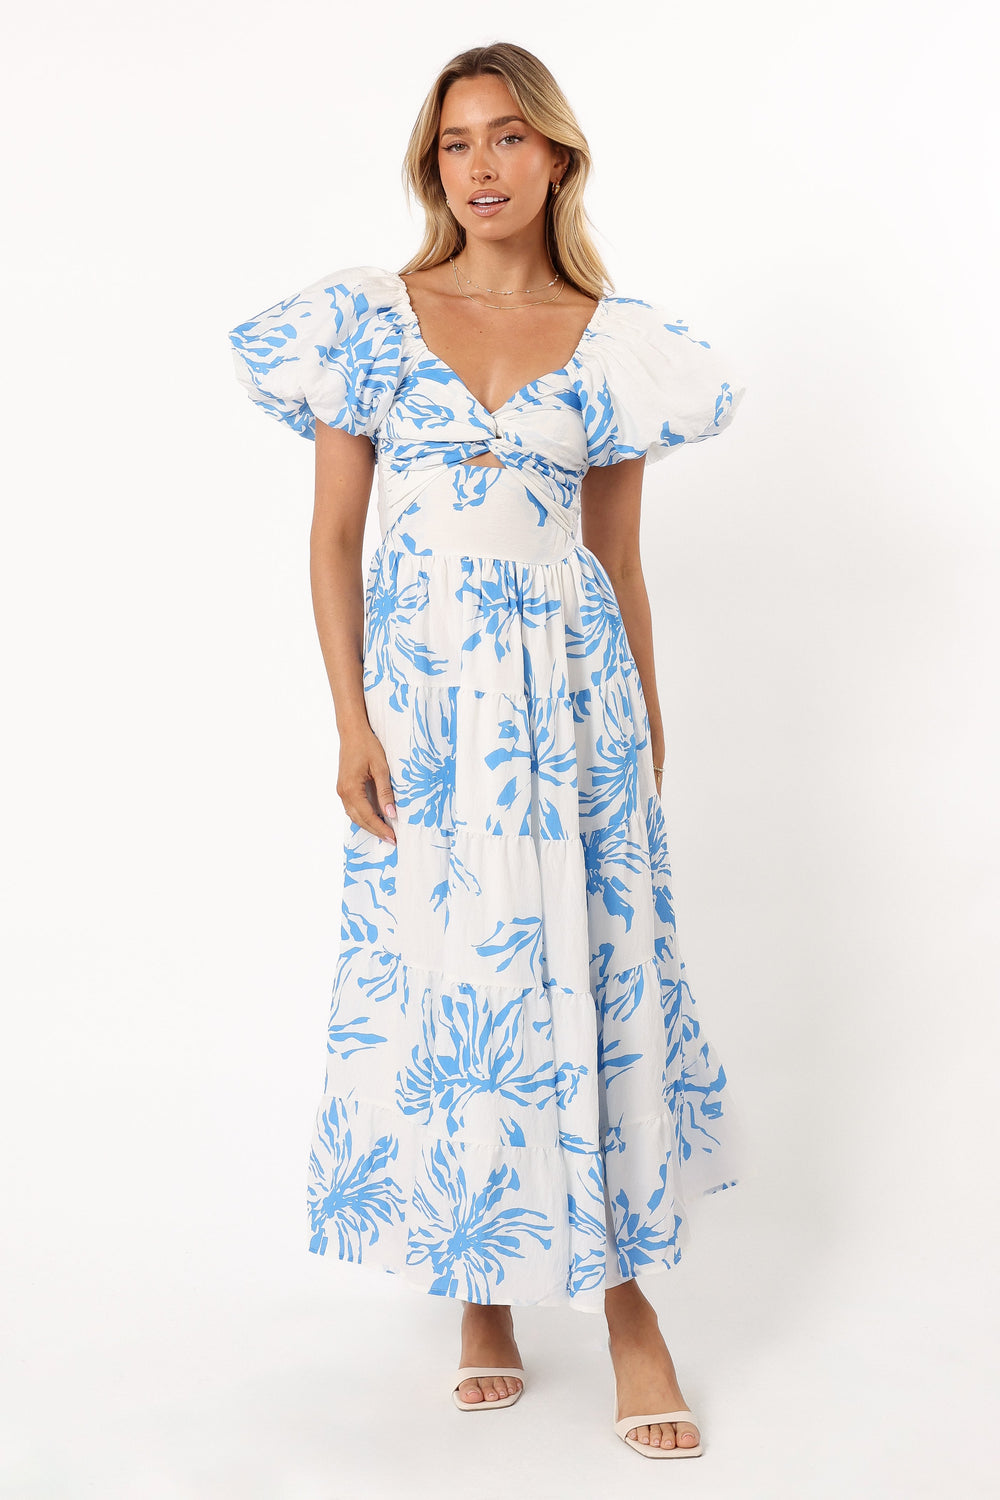 Petal and Pup USA DRESSES Dominique Midi Dress - Blue Floral Print